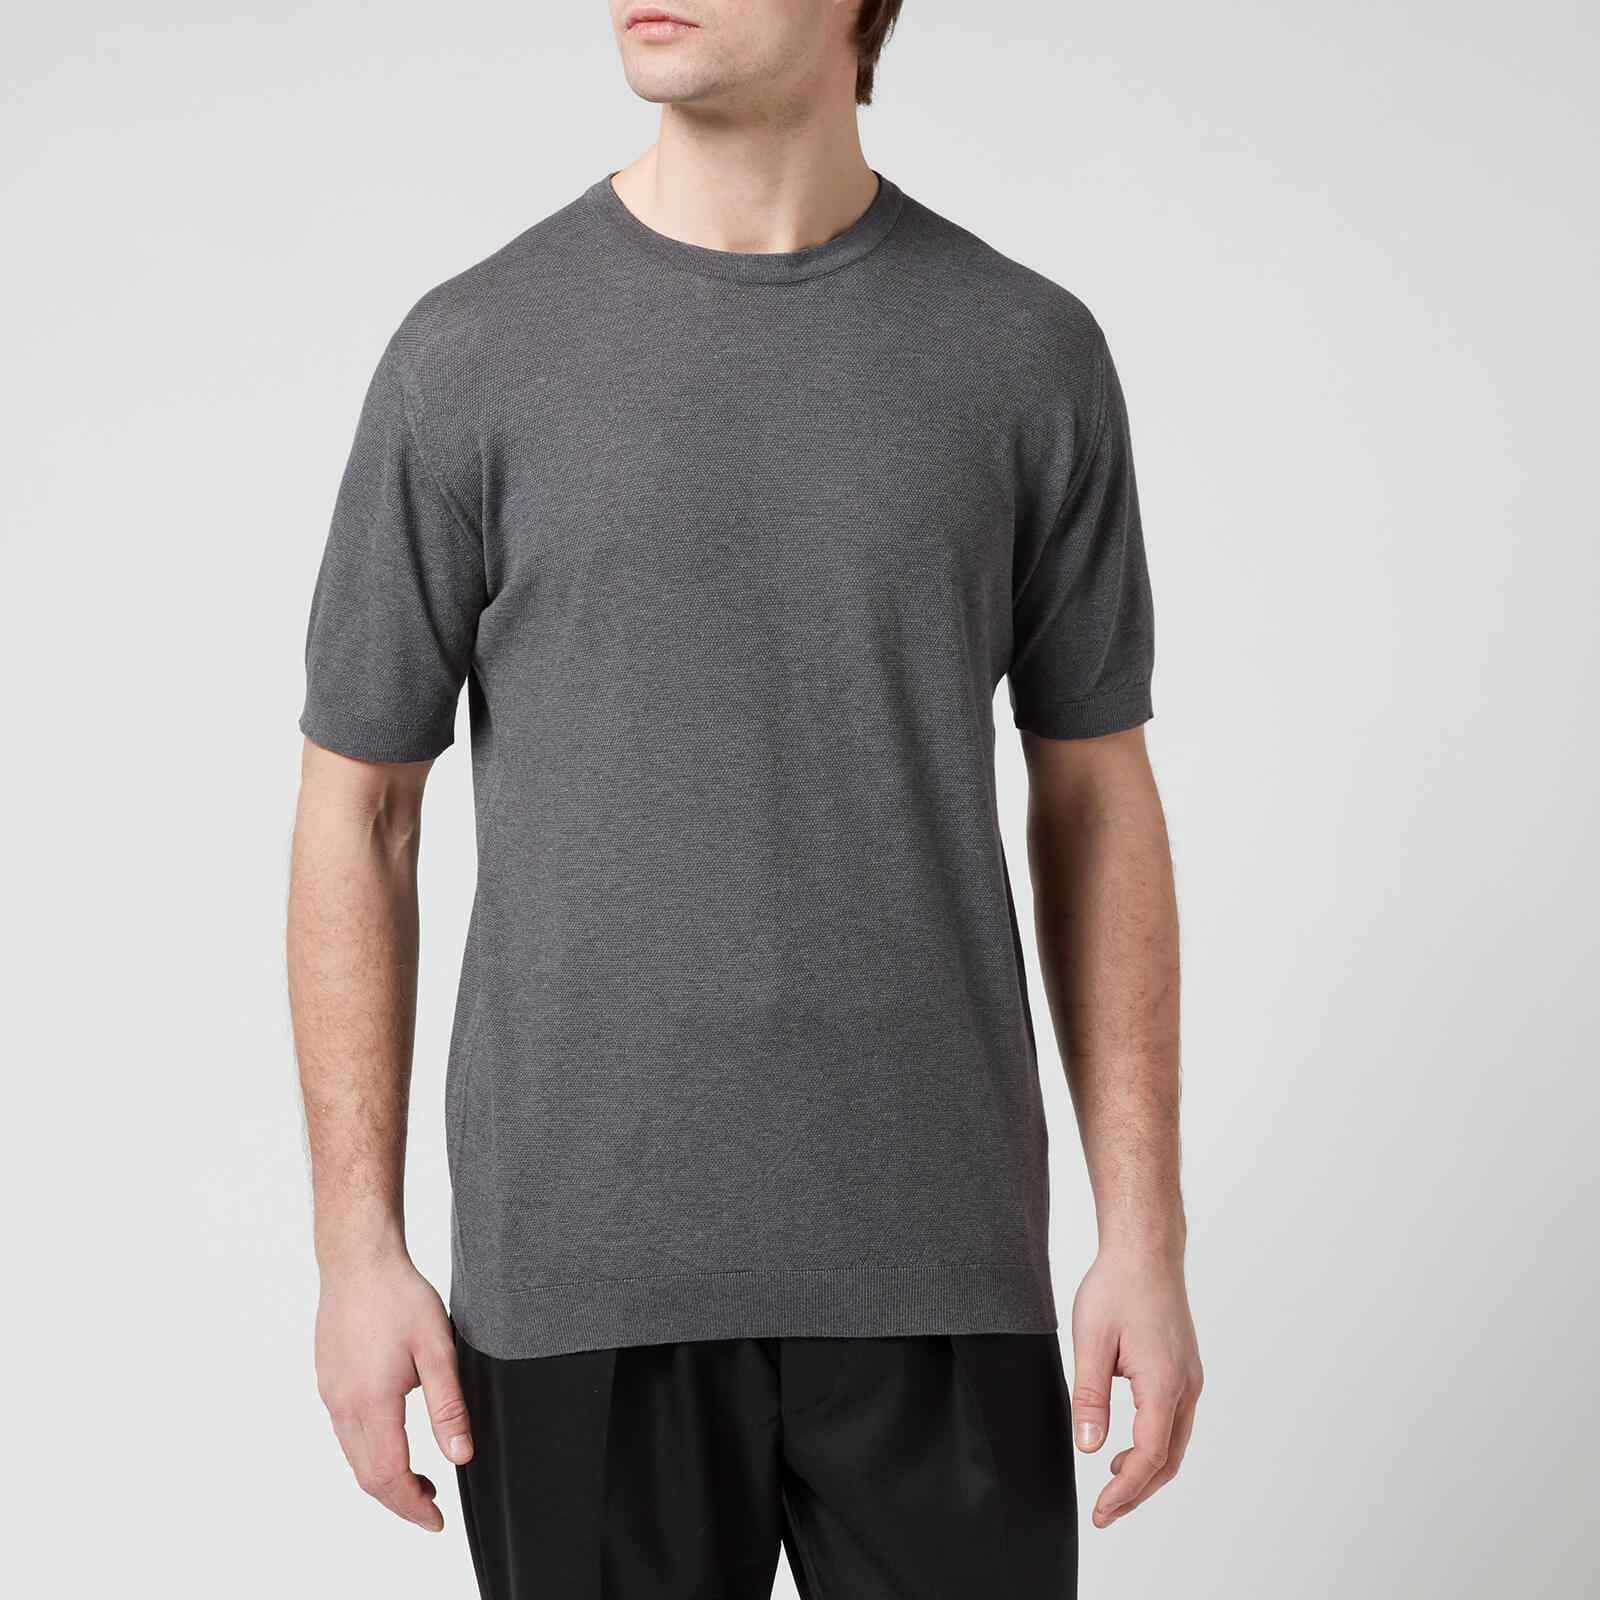 John Smedley Men's Park Pique T-Shirt - Charcoal - S